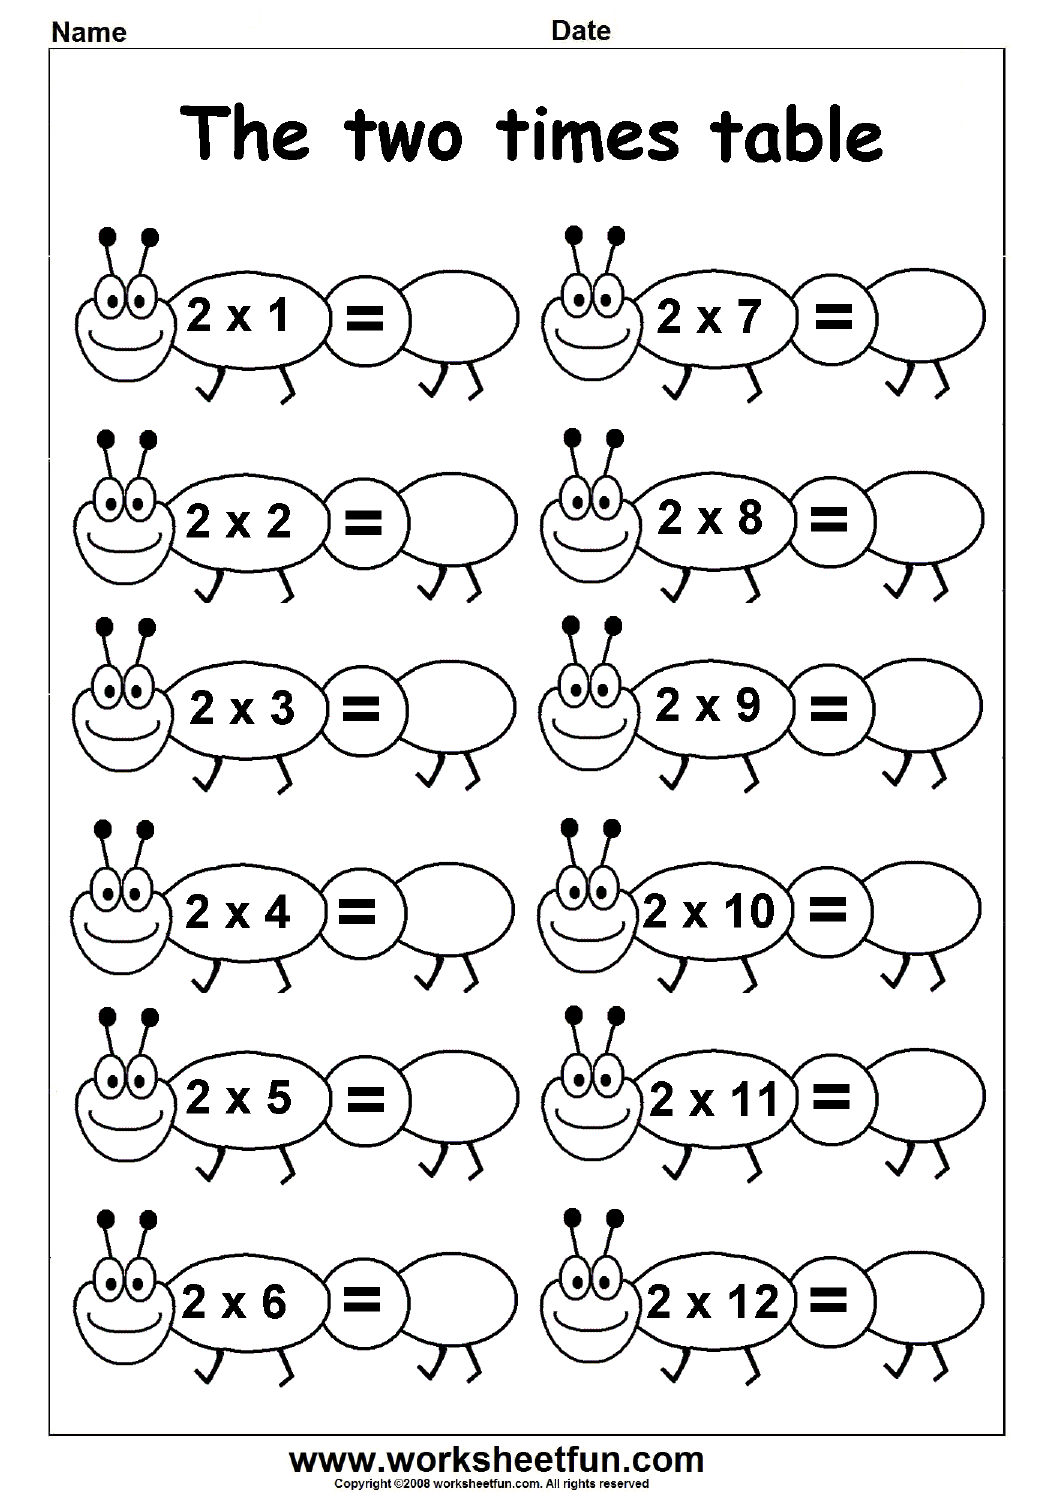 Multiplication Times Tables Worksheets – 225, 225, 225, 25, 25 & 25 Times Inside 2 Times Table Worksheet